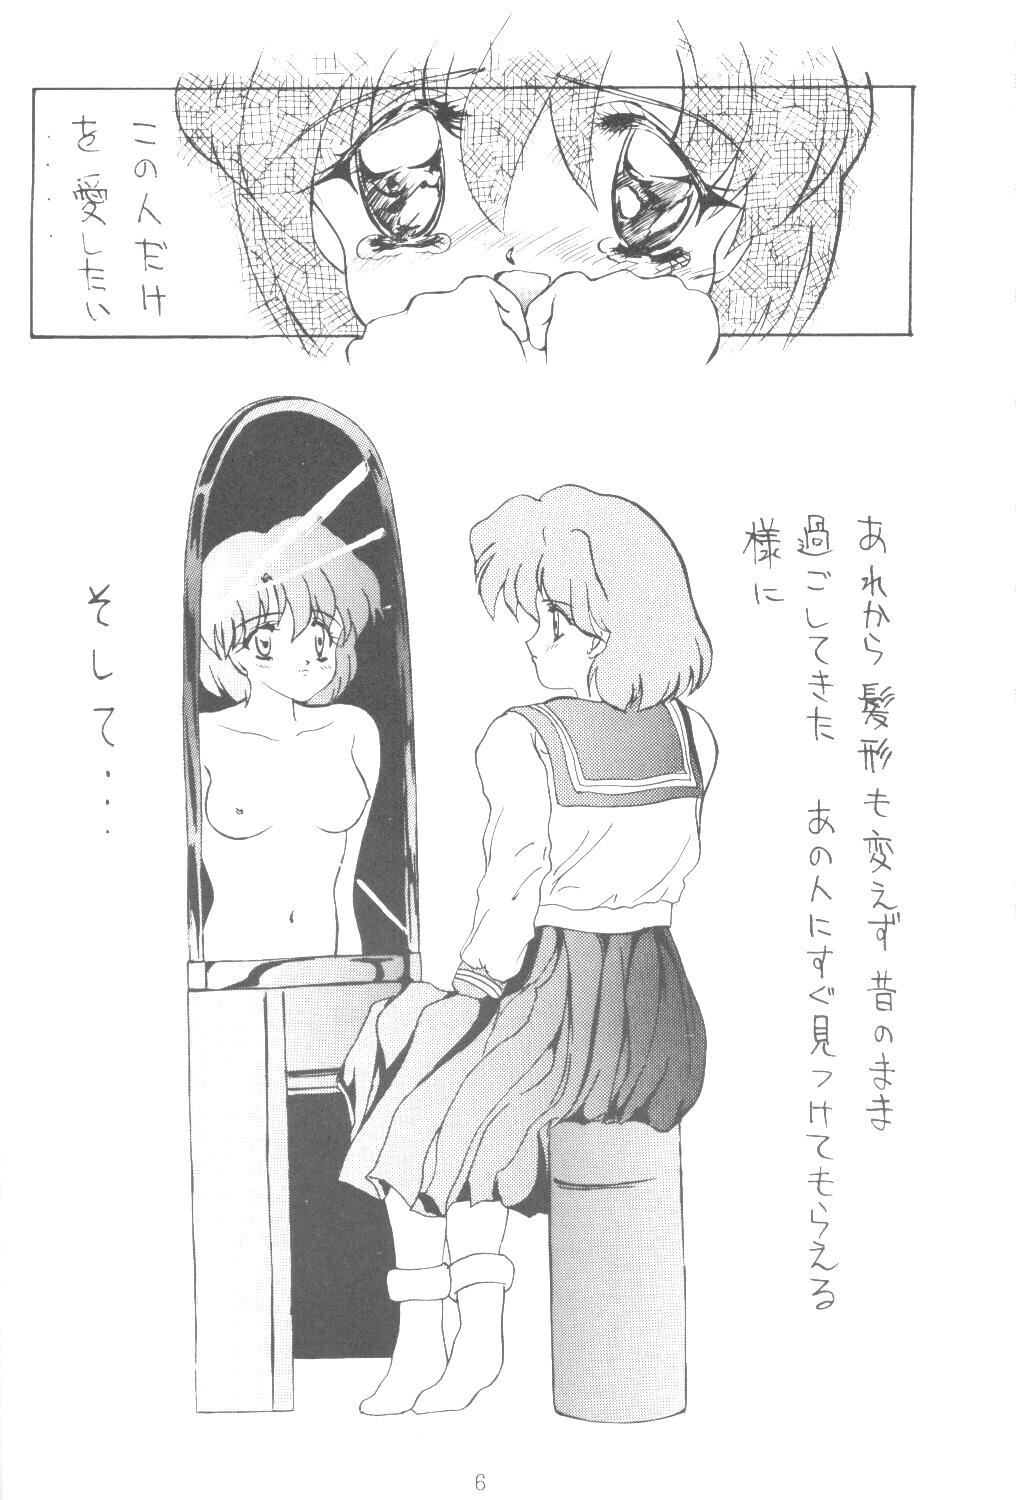 Straight ALIVE AMI LOST - Sailor moon Putinha - Page 5